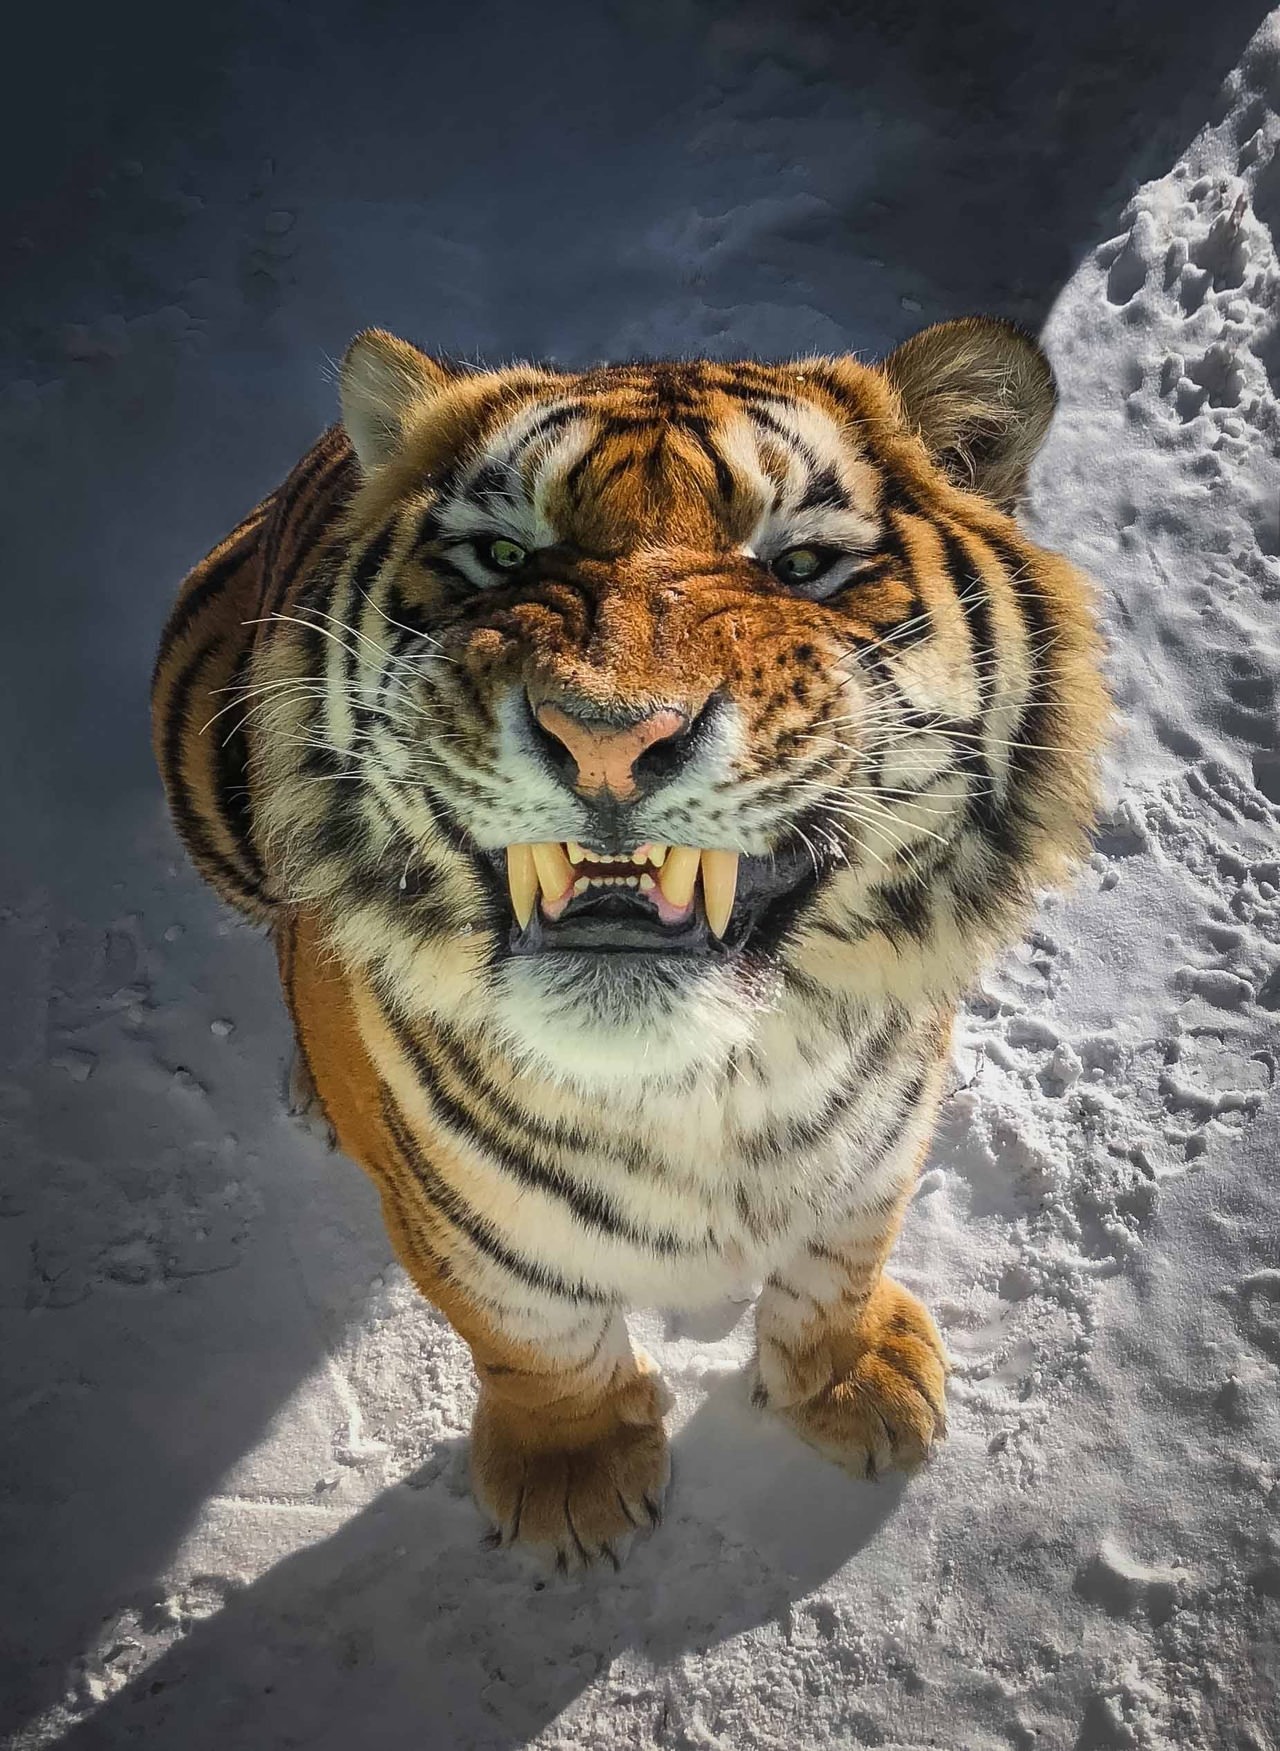 daily dose of randoms - tiger smiling